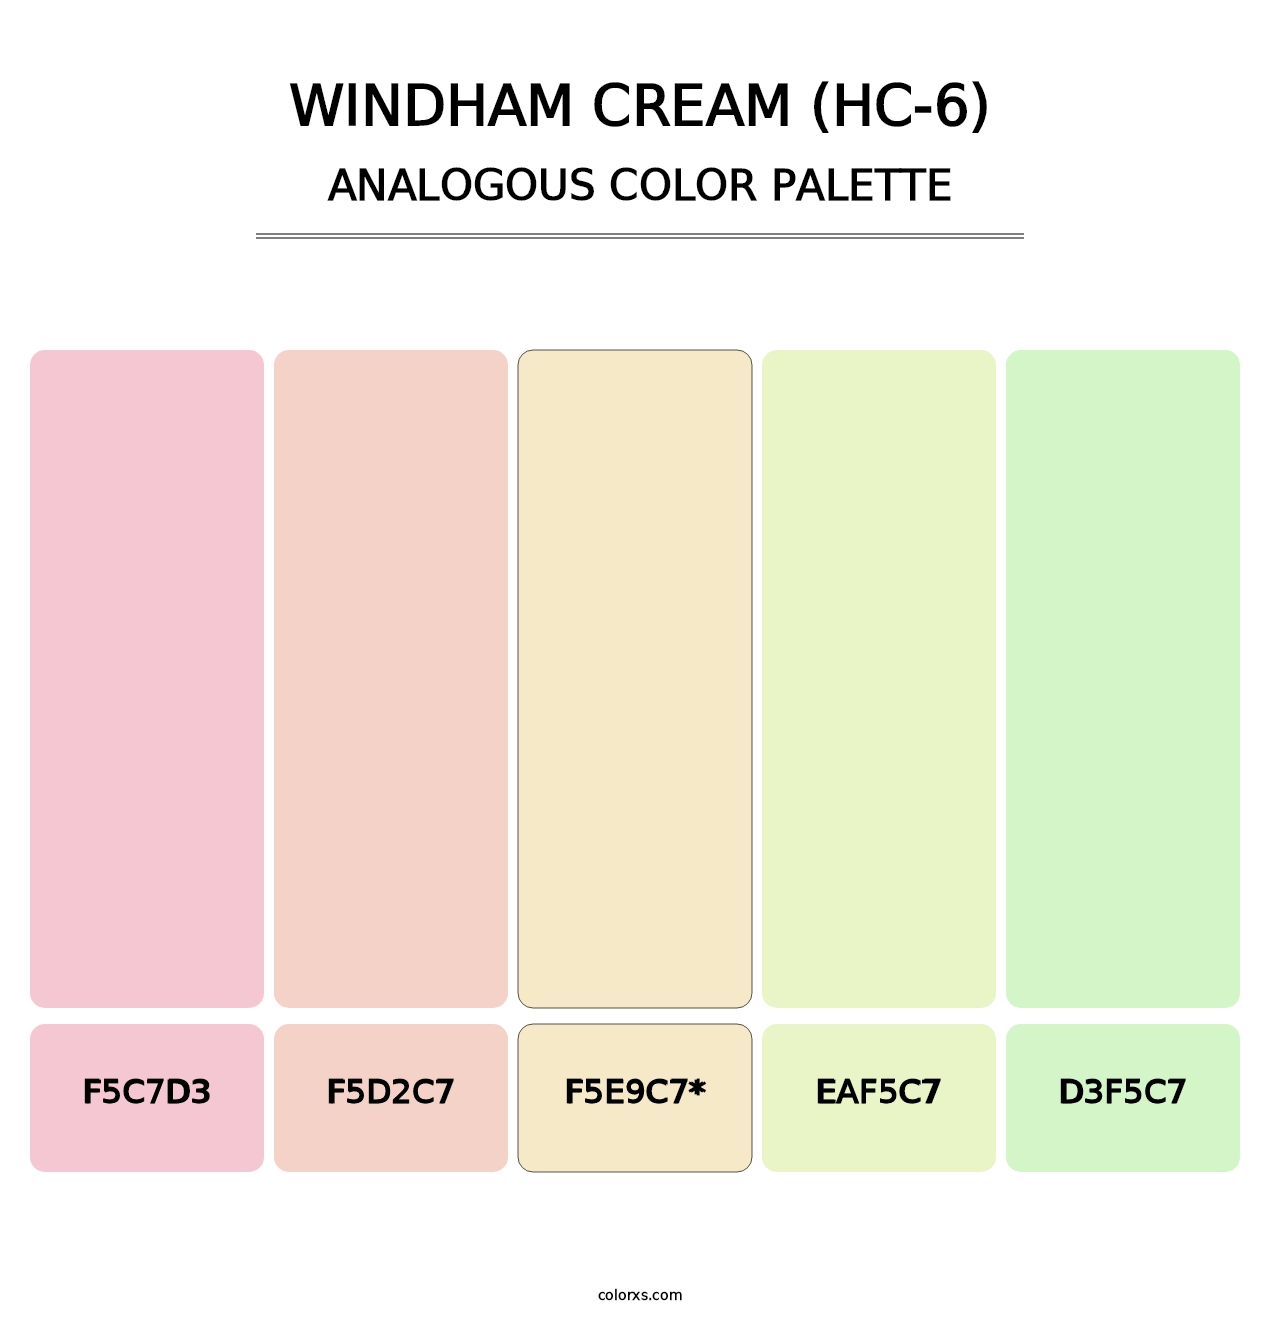 Windham Cream (HC-6) - Analogous Color Palette